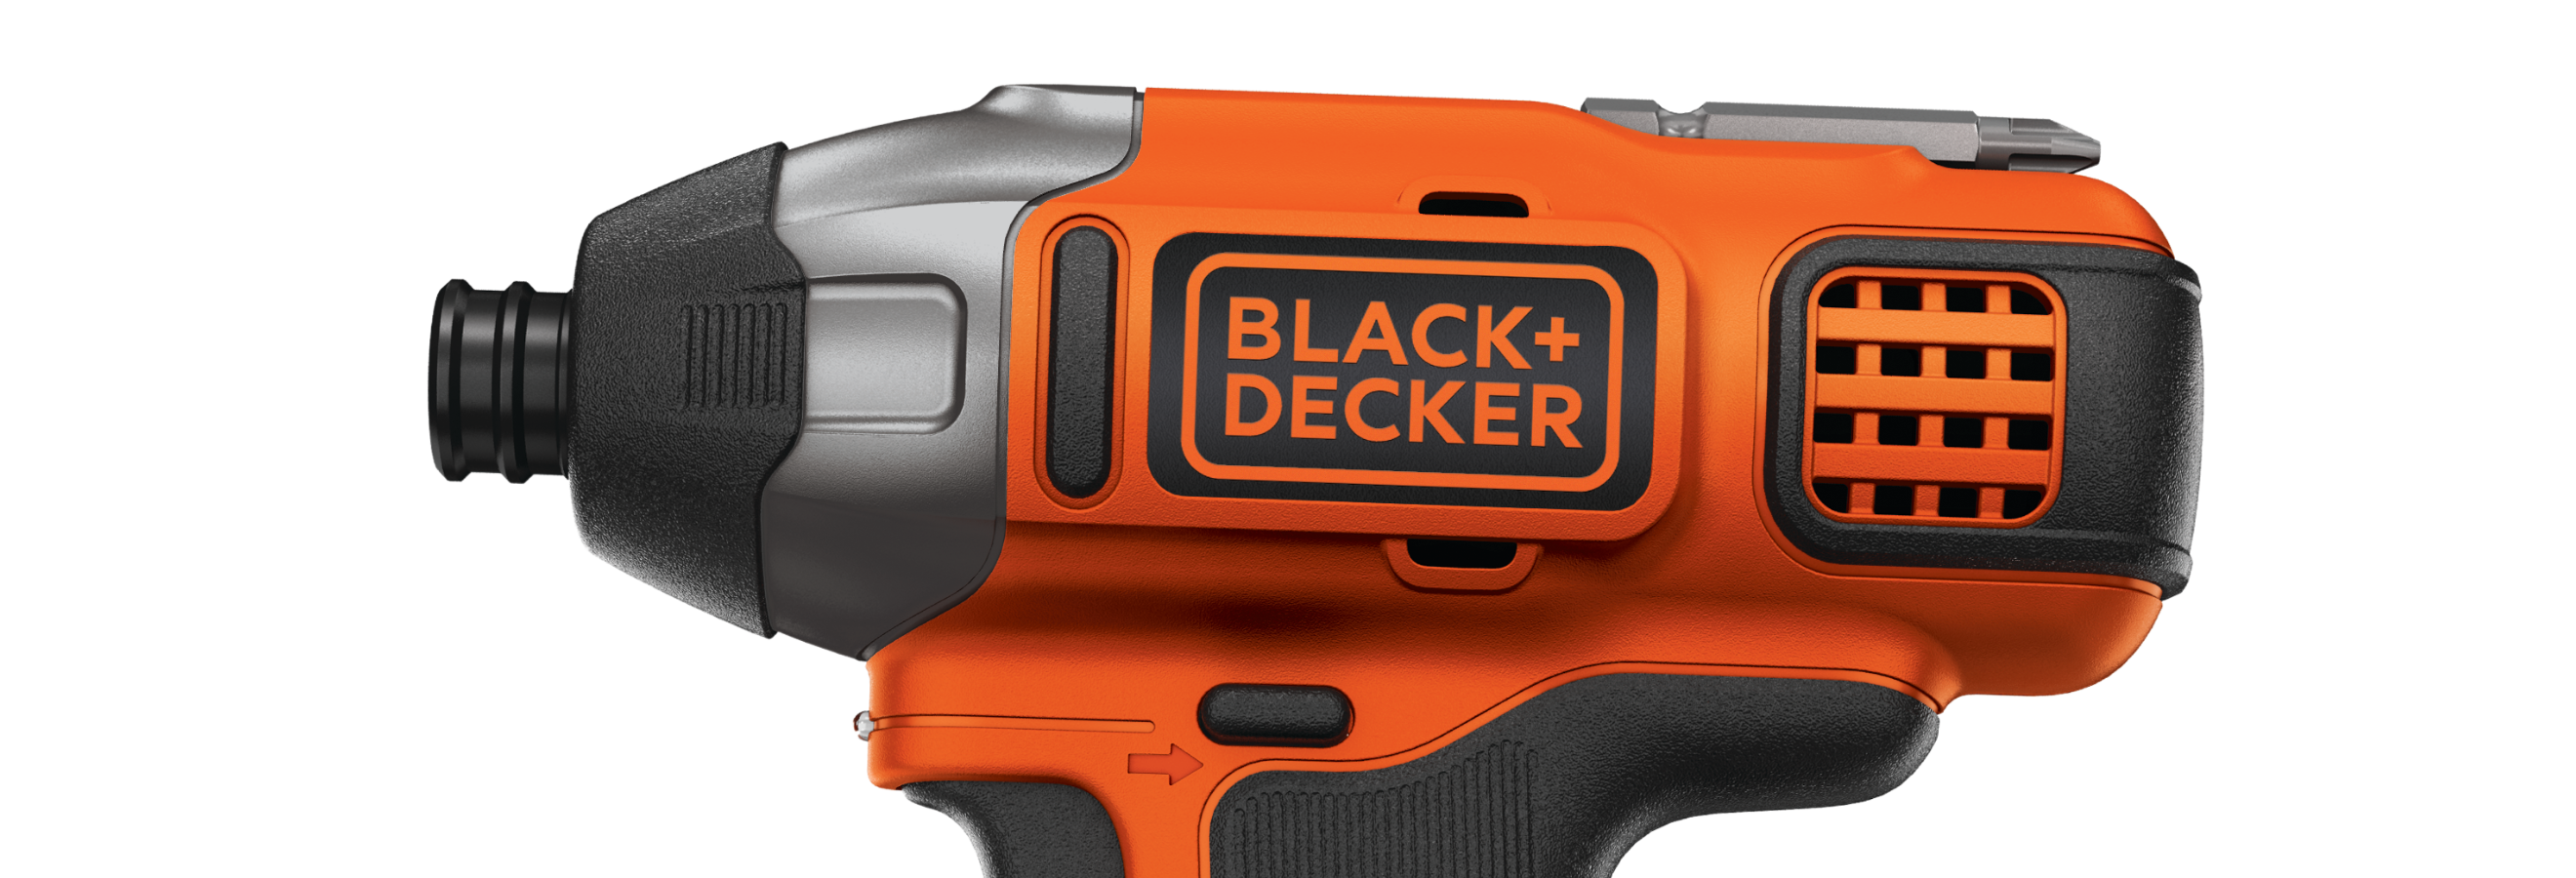 BLACK+DECKER 20V MAX* POWERCONNECT 1/4 in. Cordless Impact Driver Kit  (BDCI20C)